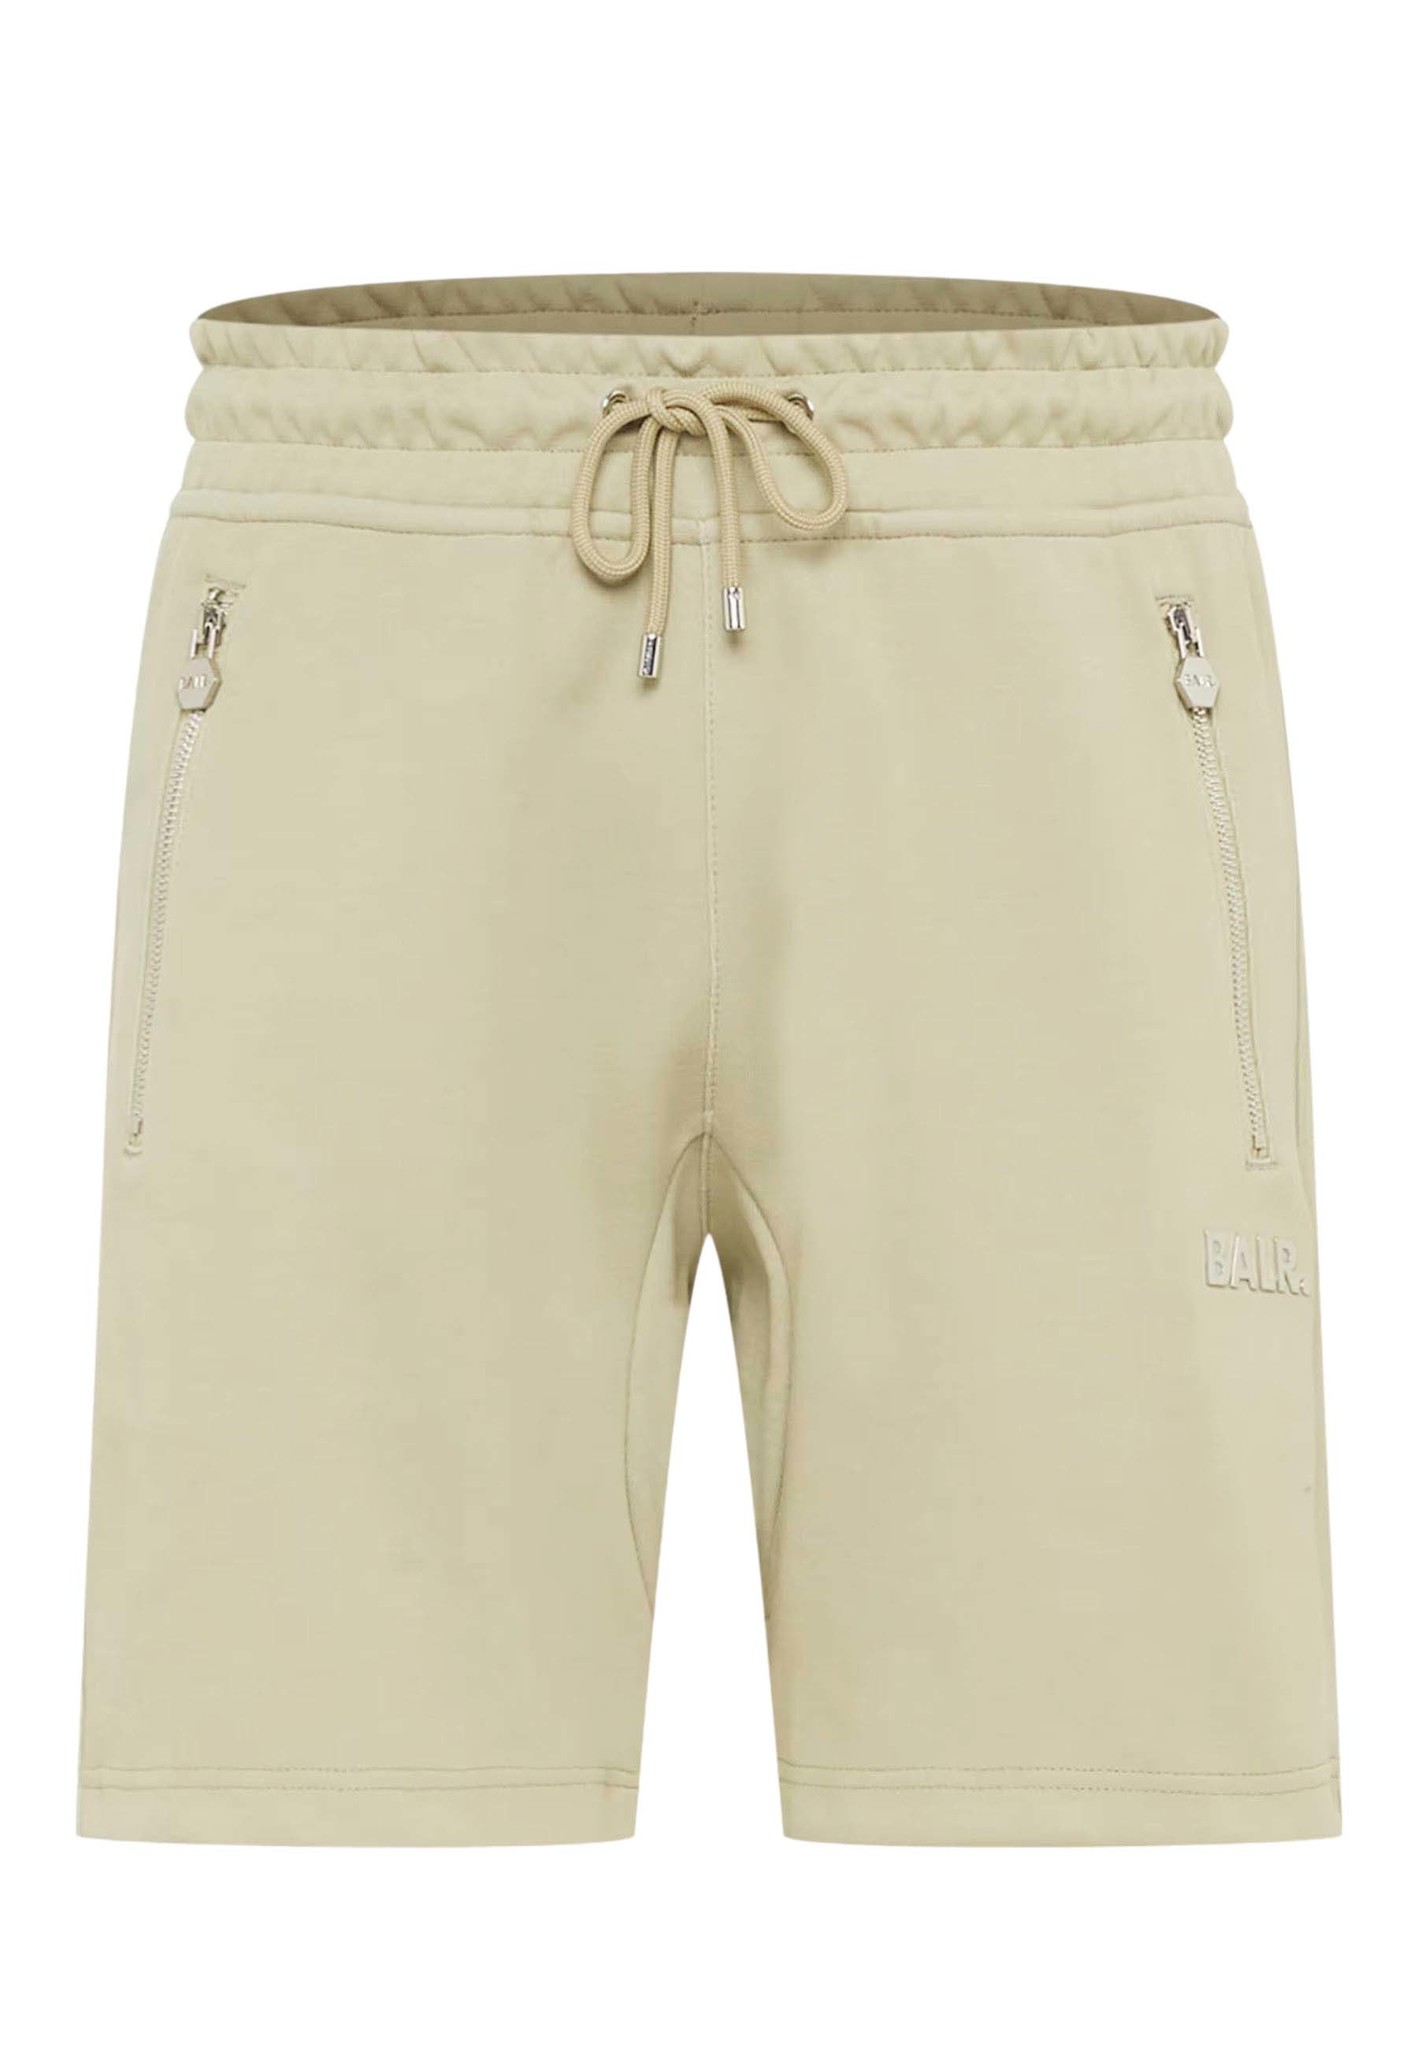 BALR. B1431 1003 shorts beige Heren maat L